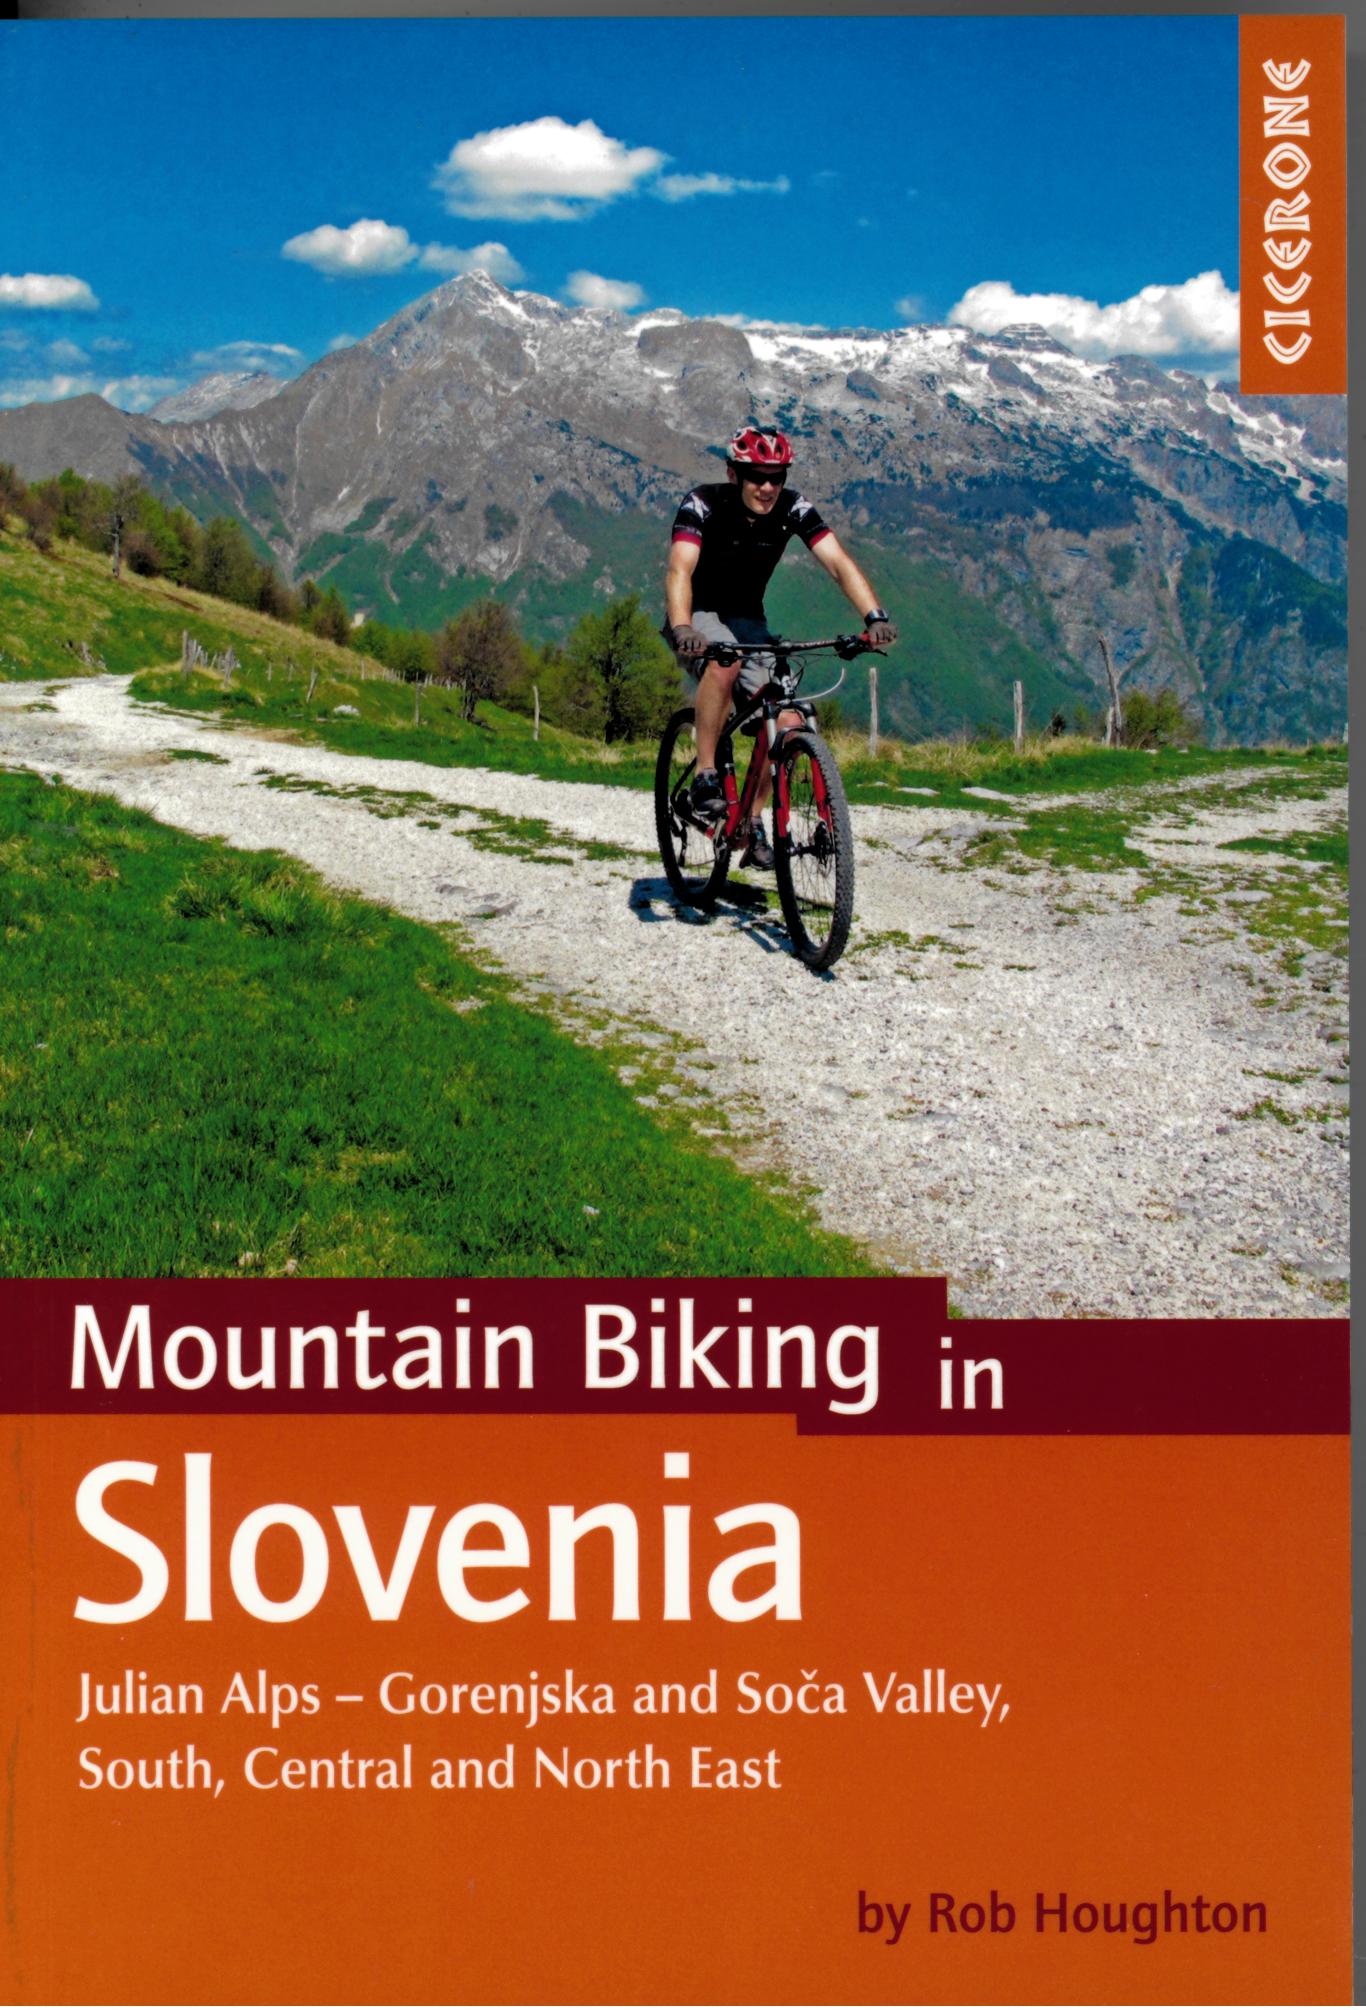 MOUNTAIN BIKING IN SLOVENIA